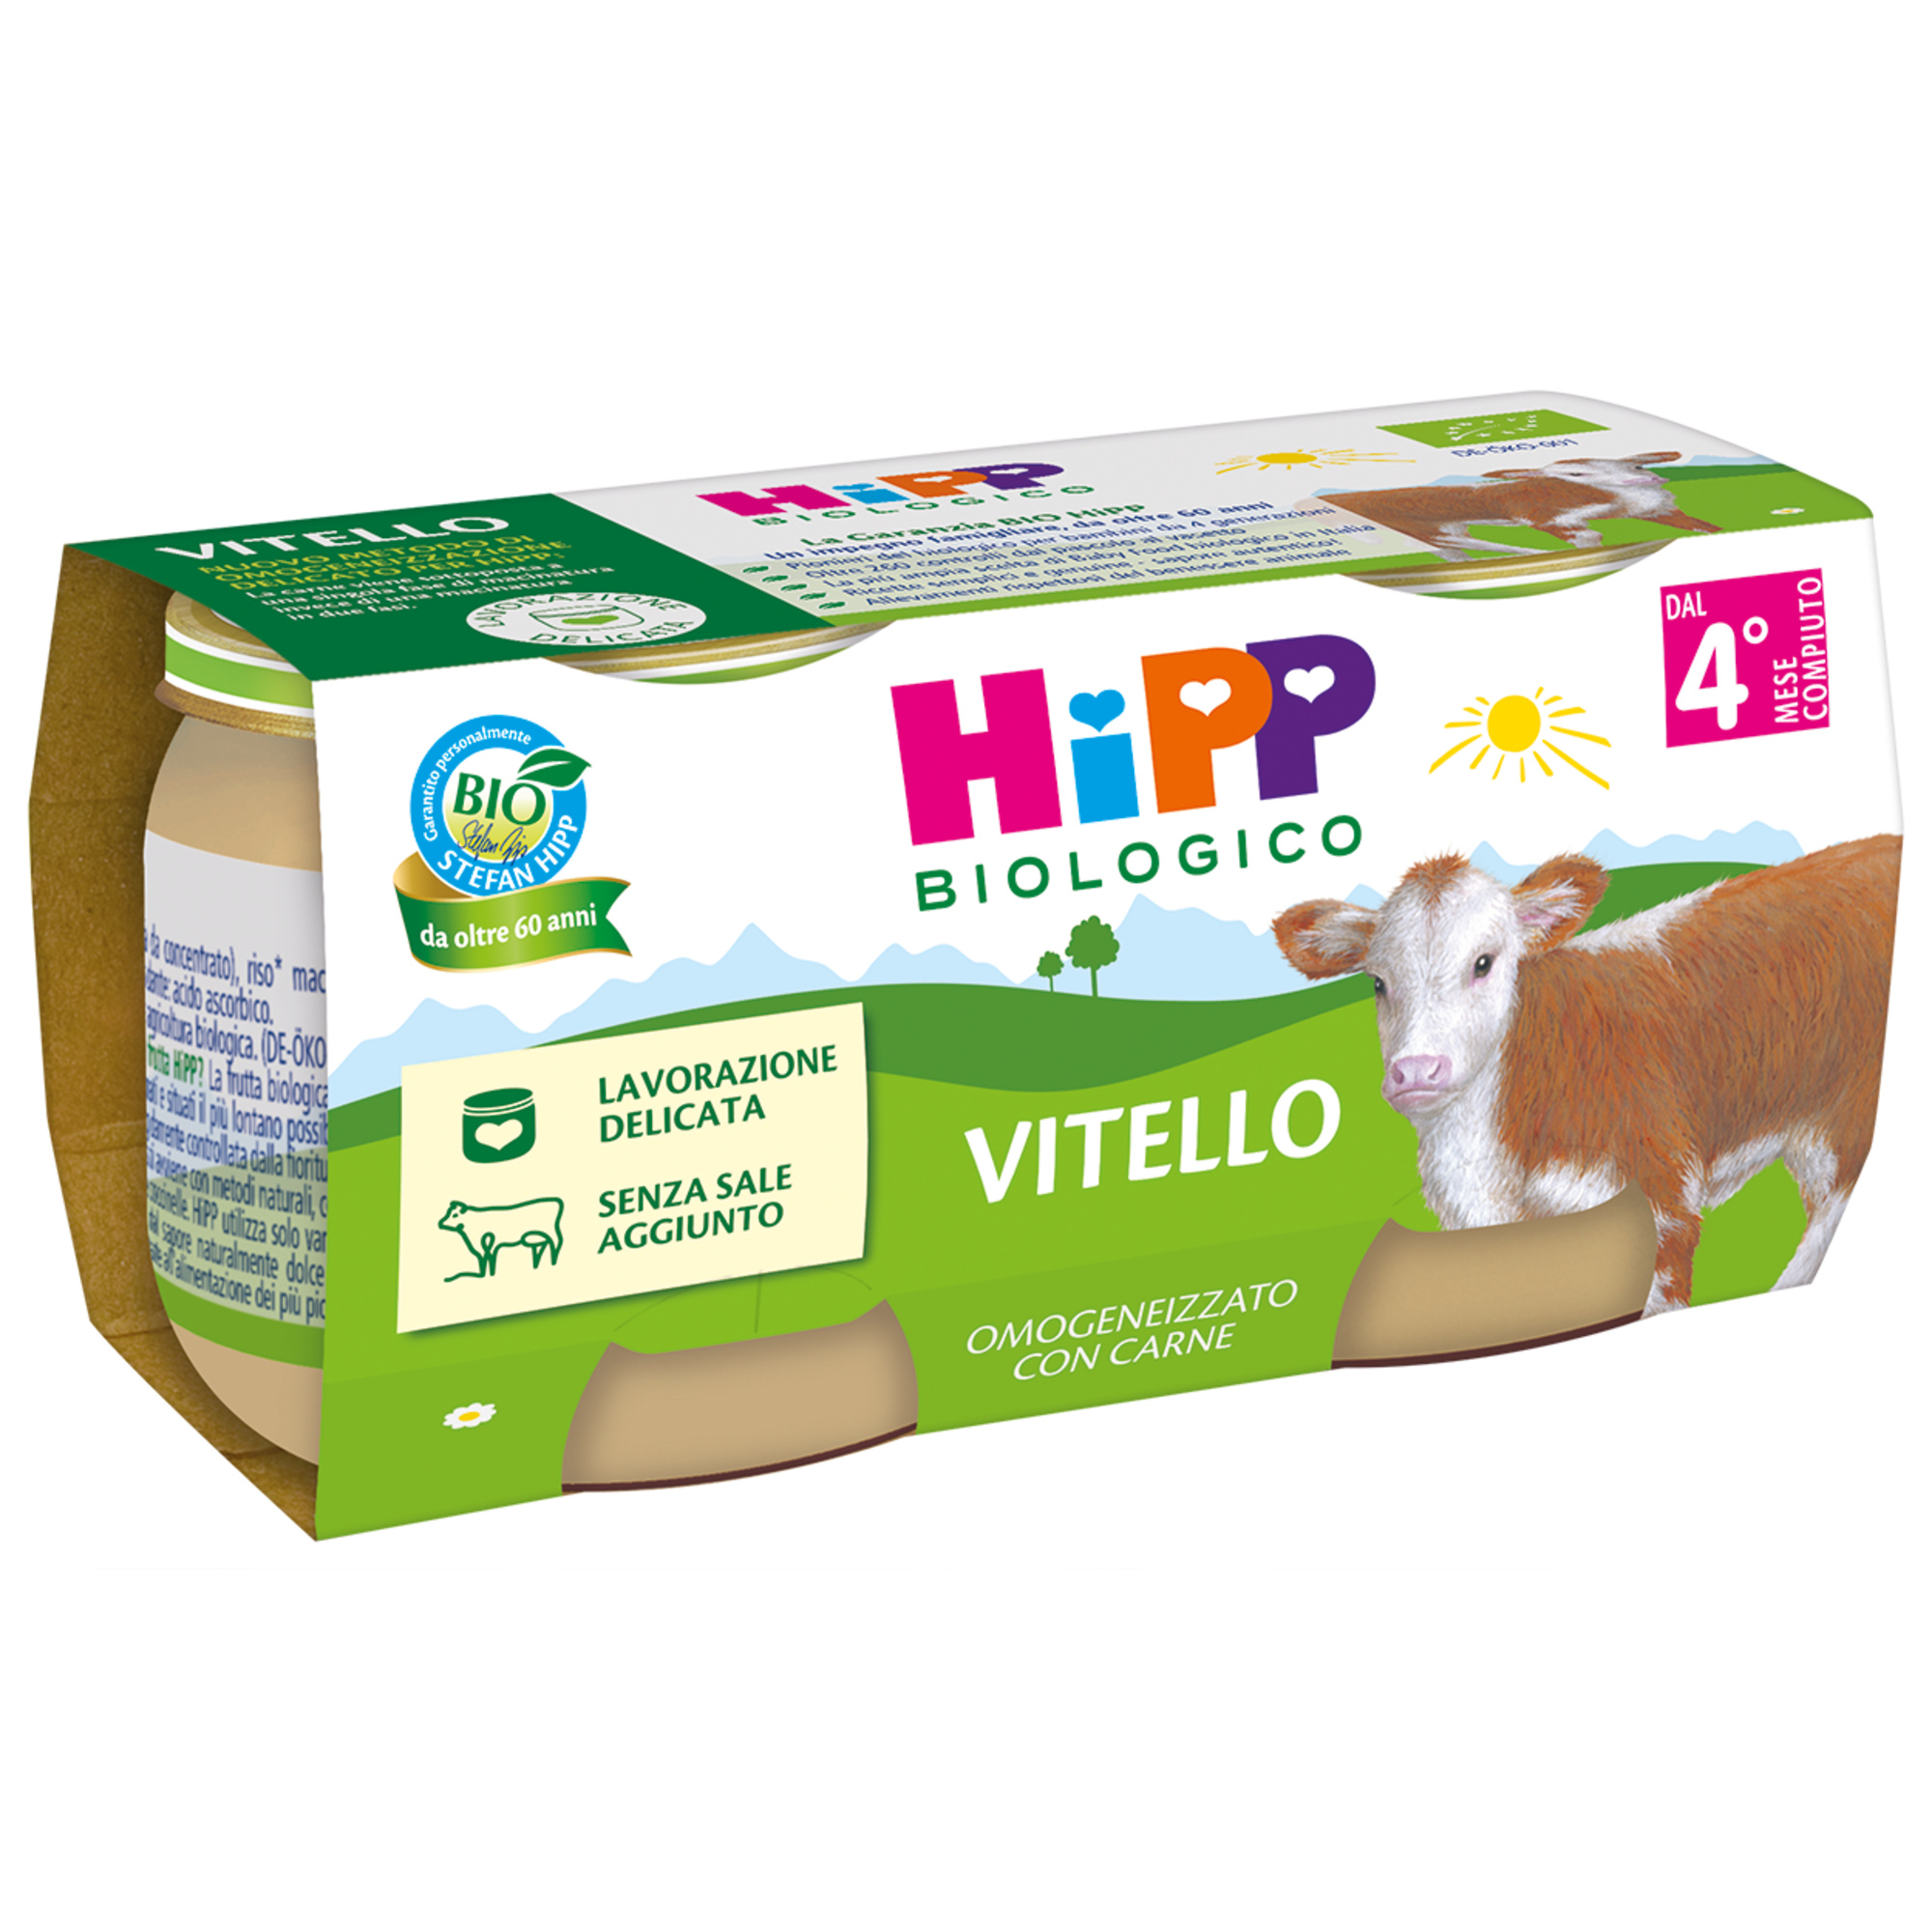 Hipp omogeneizzato vitello 2x80g - Hipp Baby